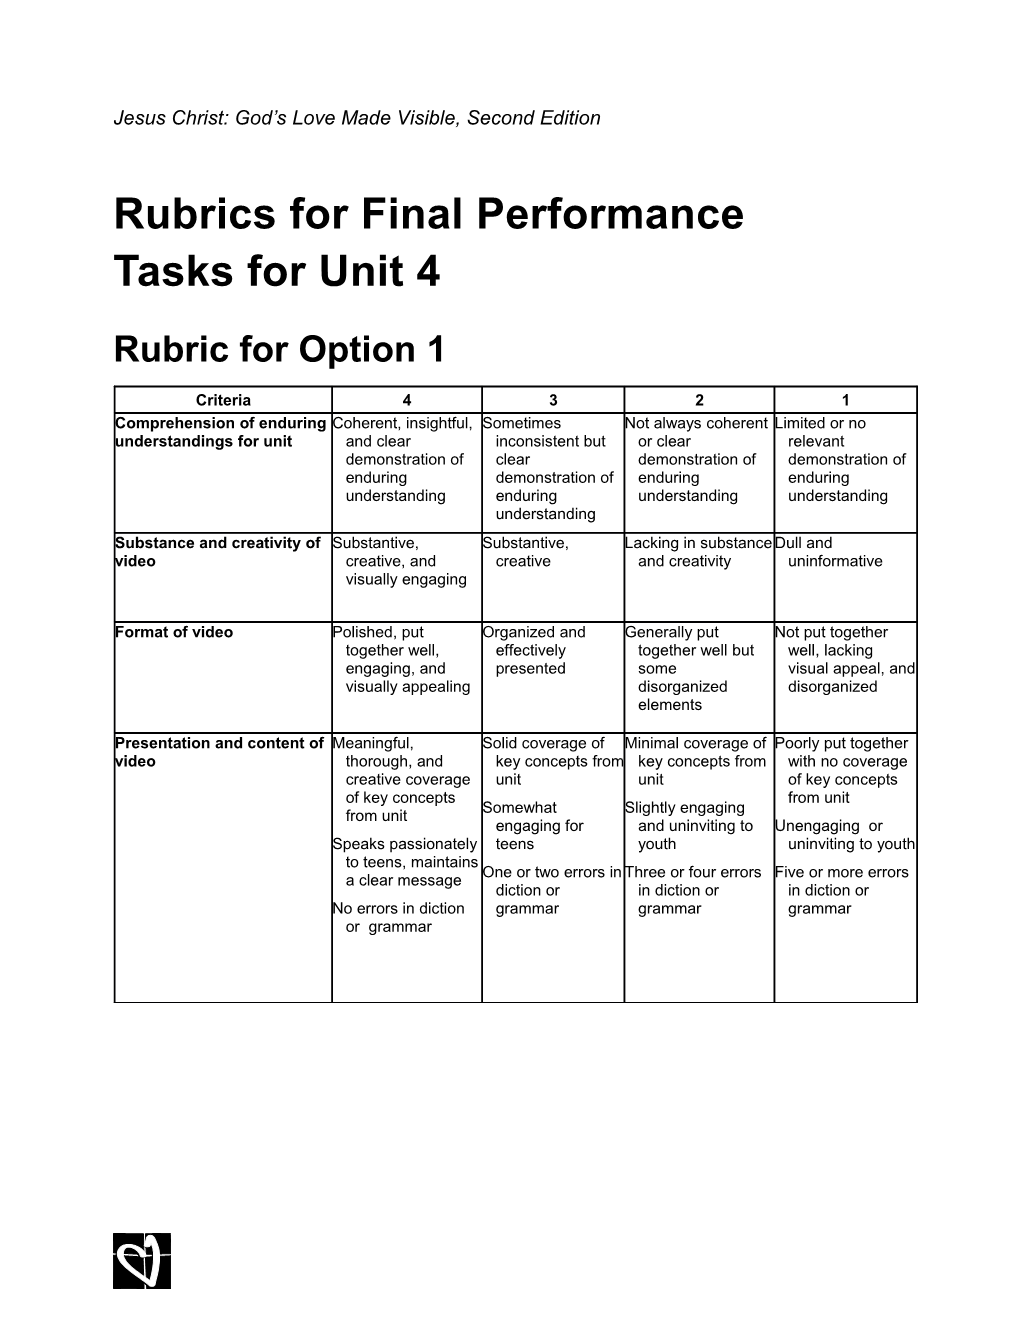 Rubrics for Final Performance Tasks for Unit 4